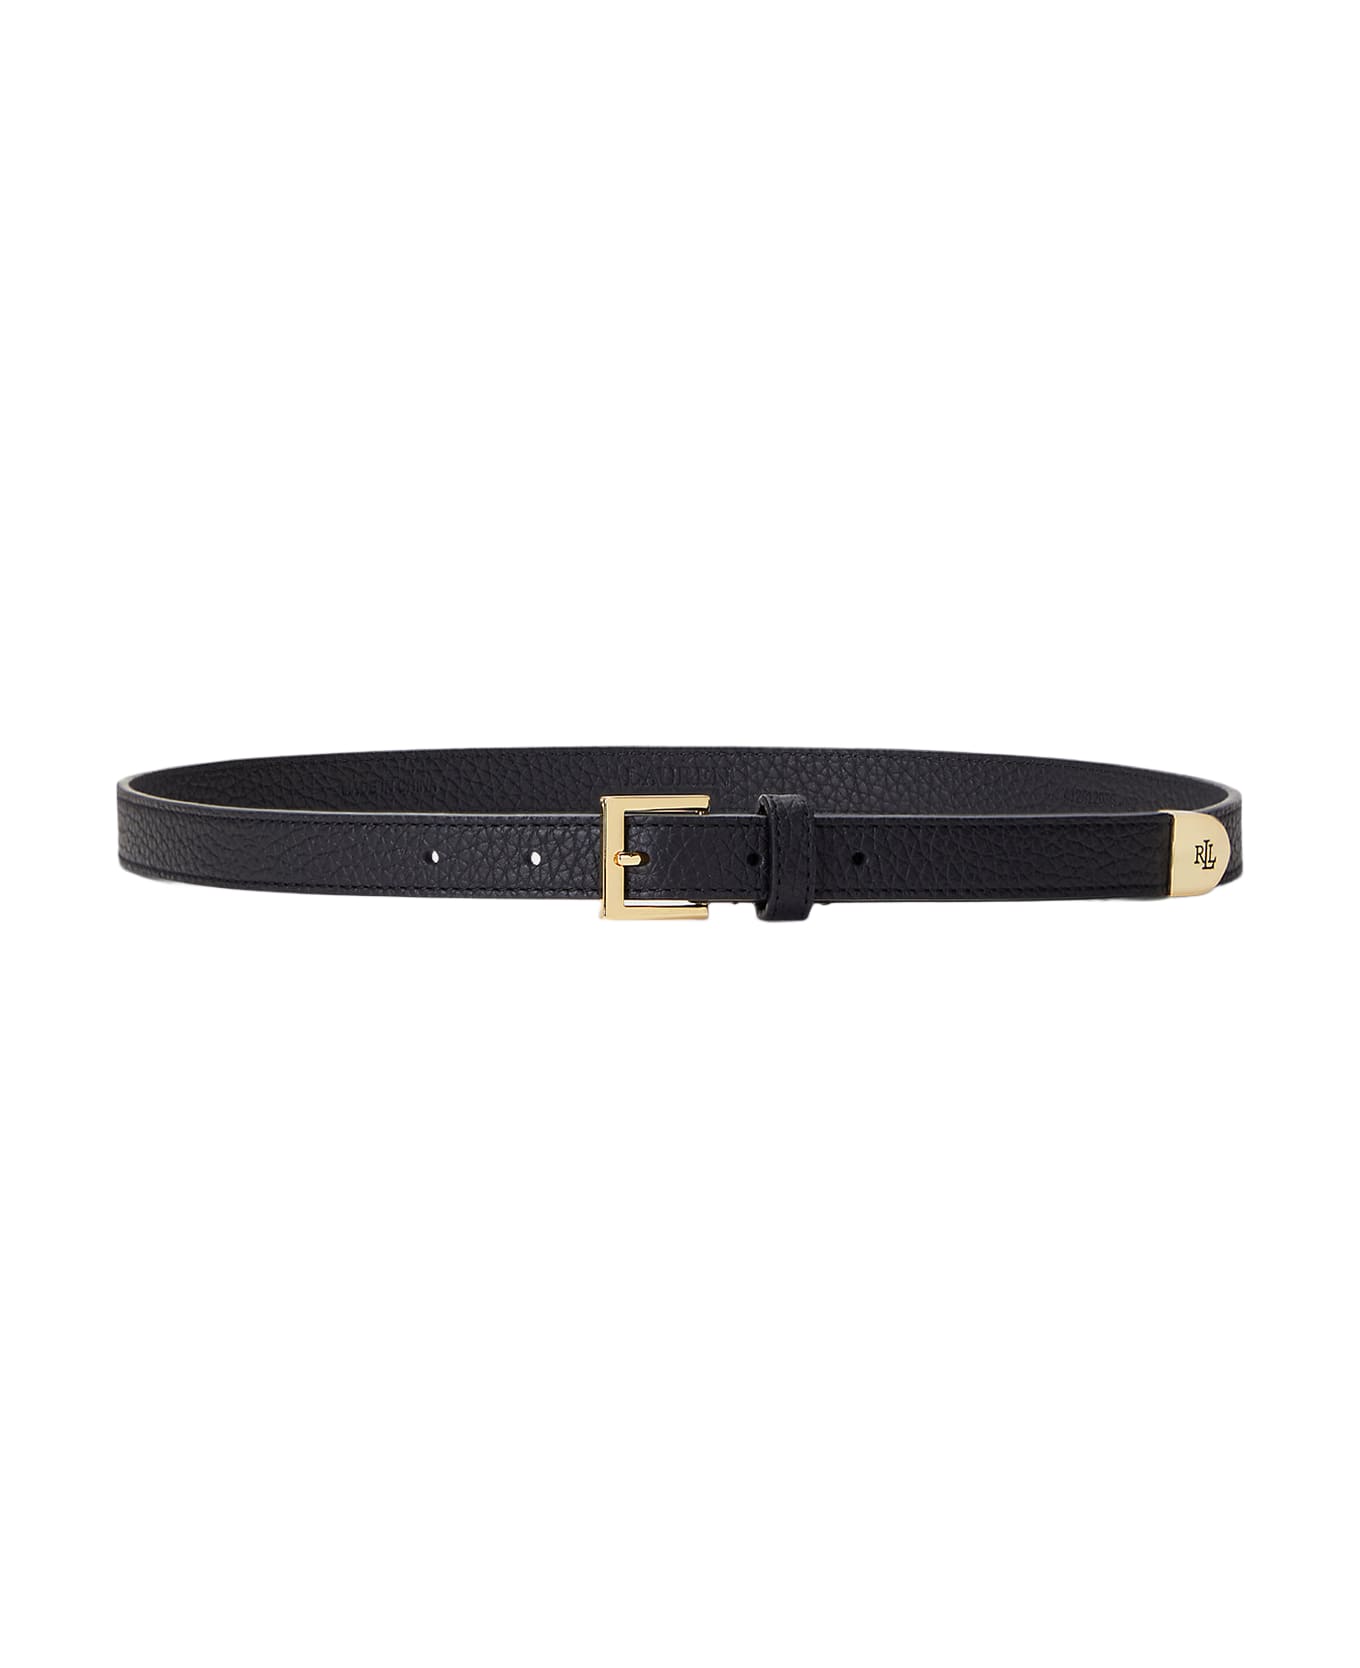 Ralph Lauren Lrl Cap 20 Belt Skinny - Black